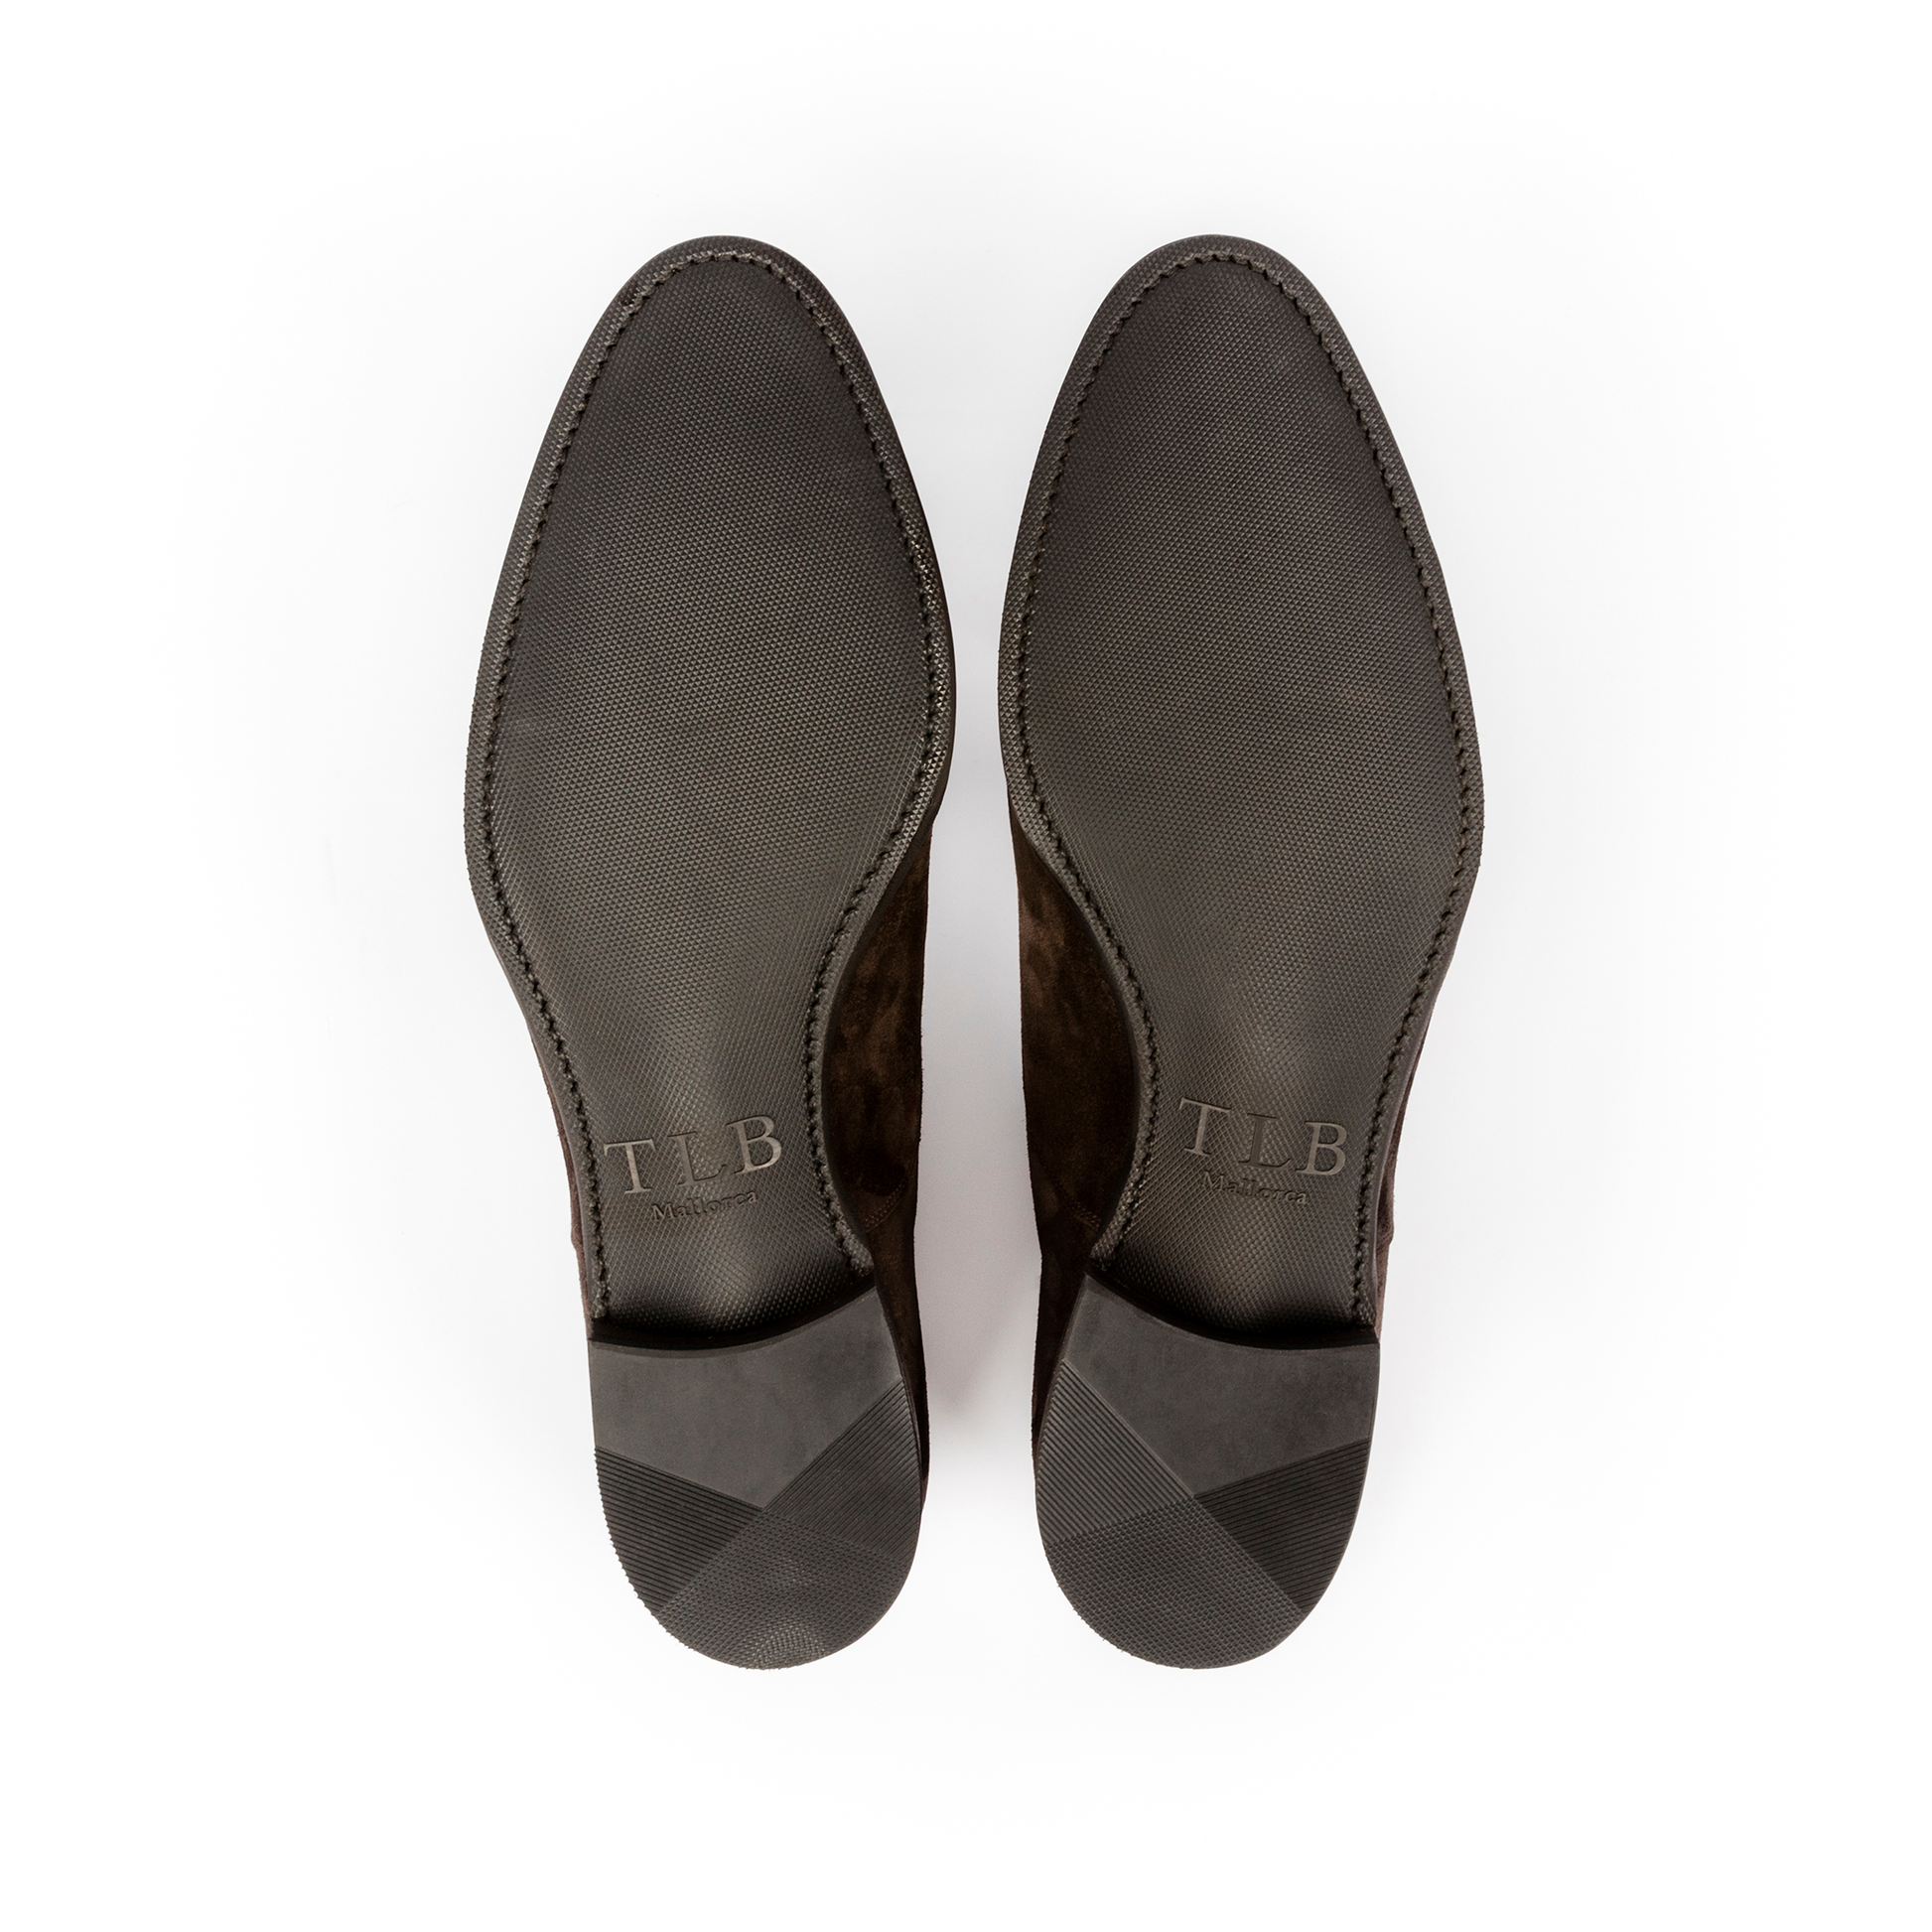 TLB Mallorca leather shoes 206 / VAN GOGH / HATCH GRAIN DARK BROWN